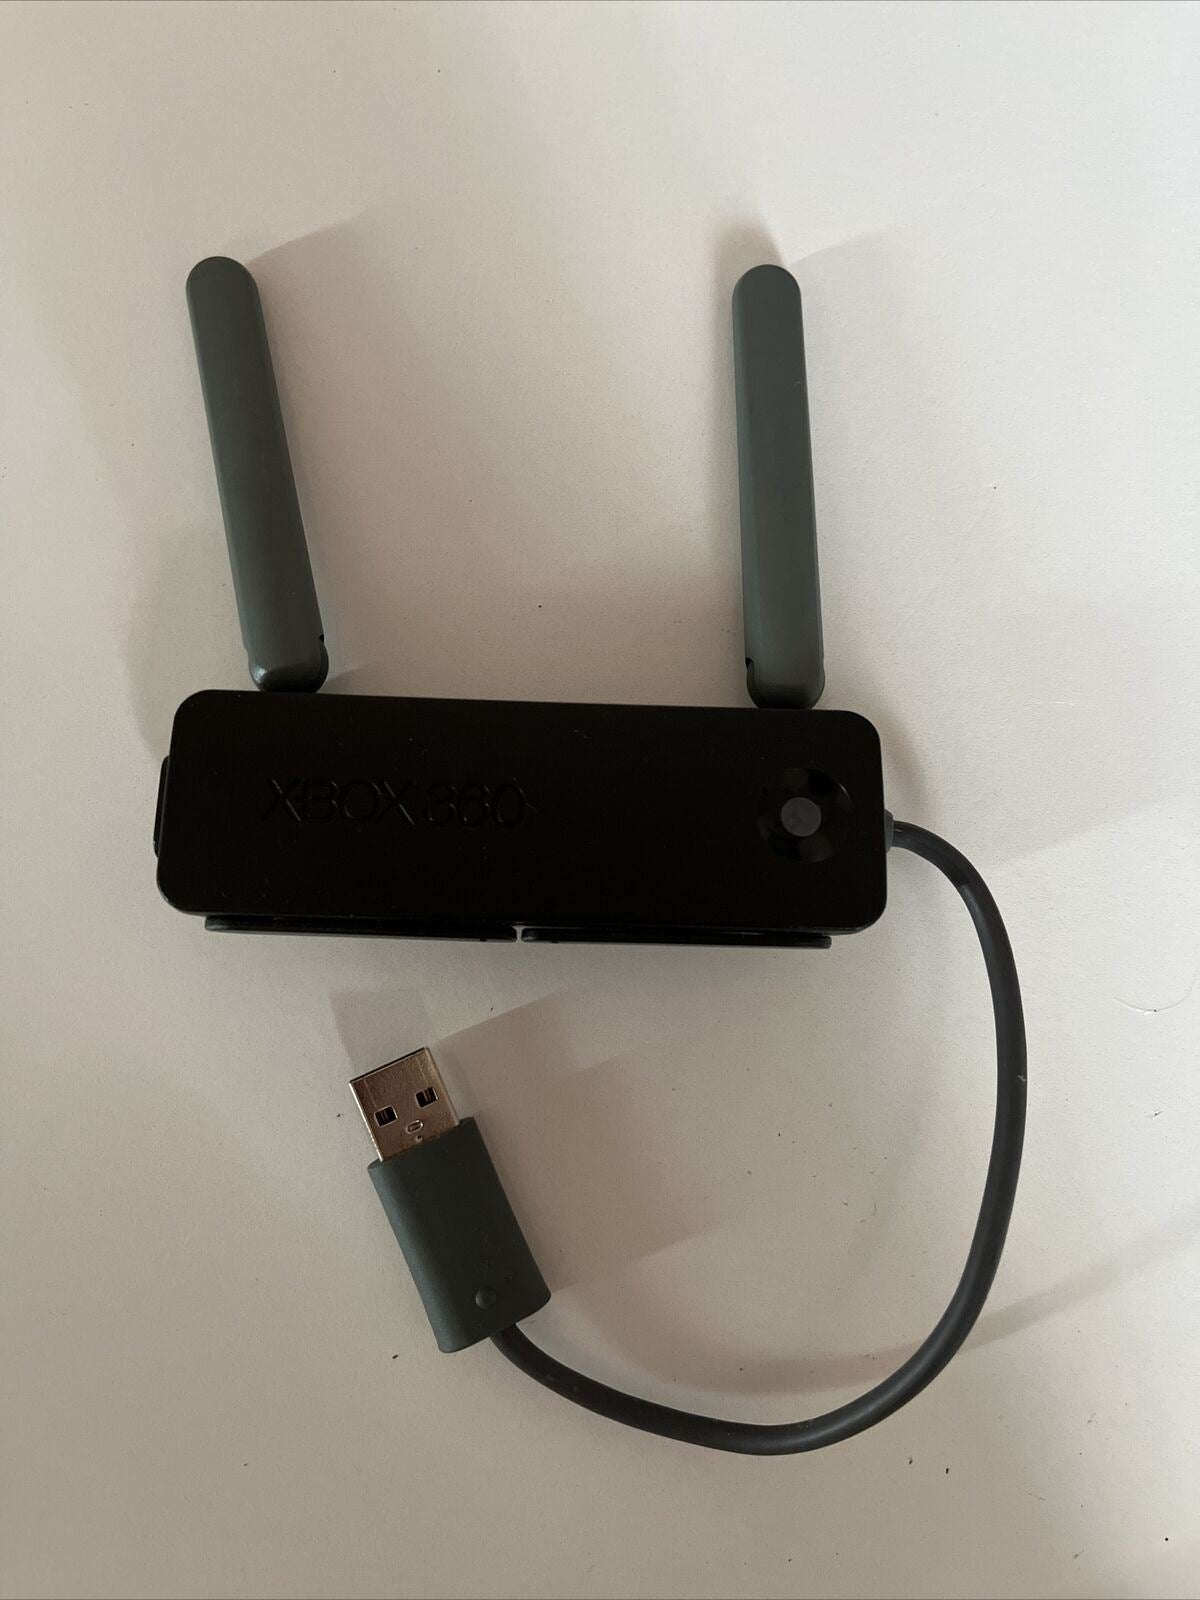 Microsoft Xbox 360 Wireless N Network Adapter